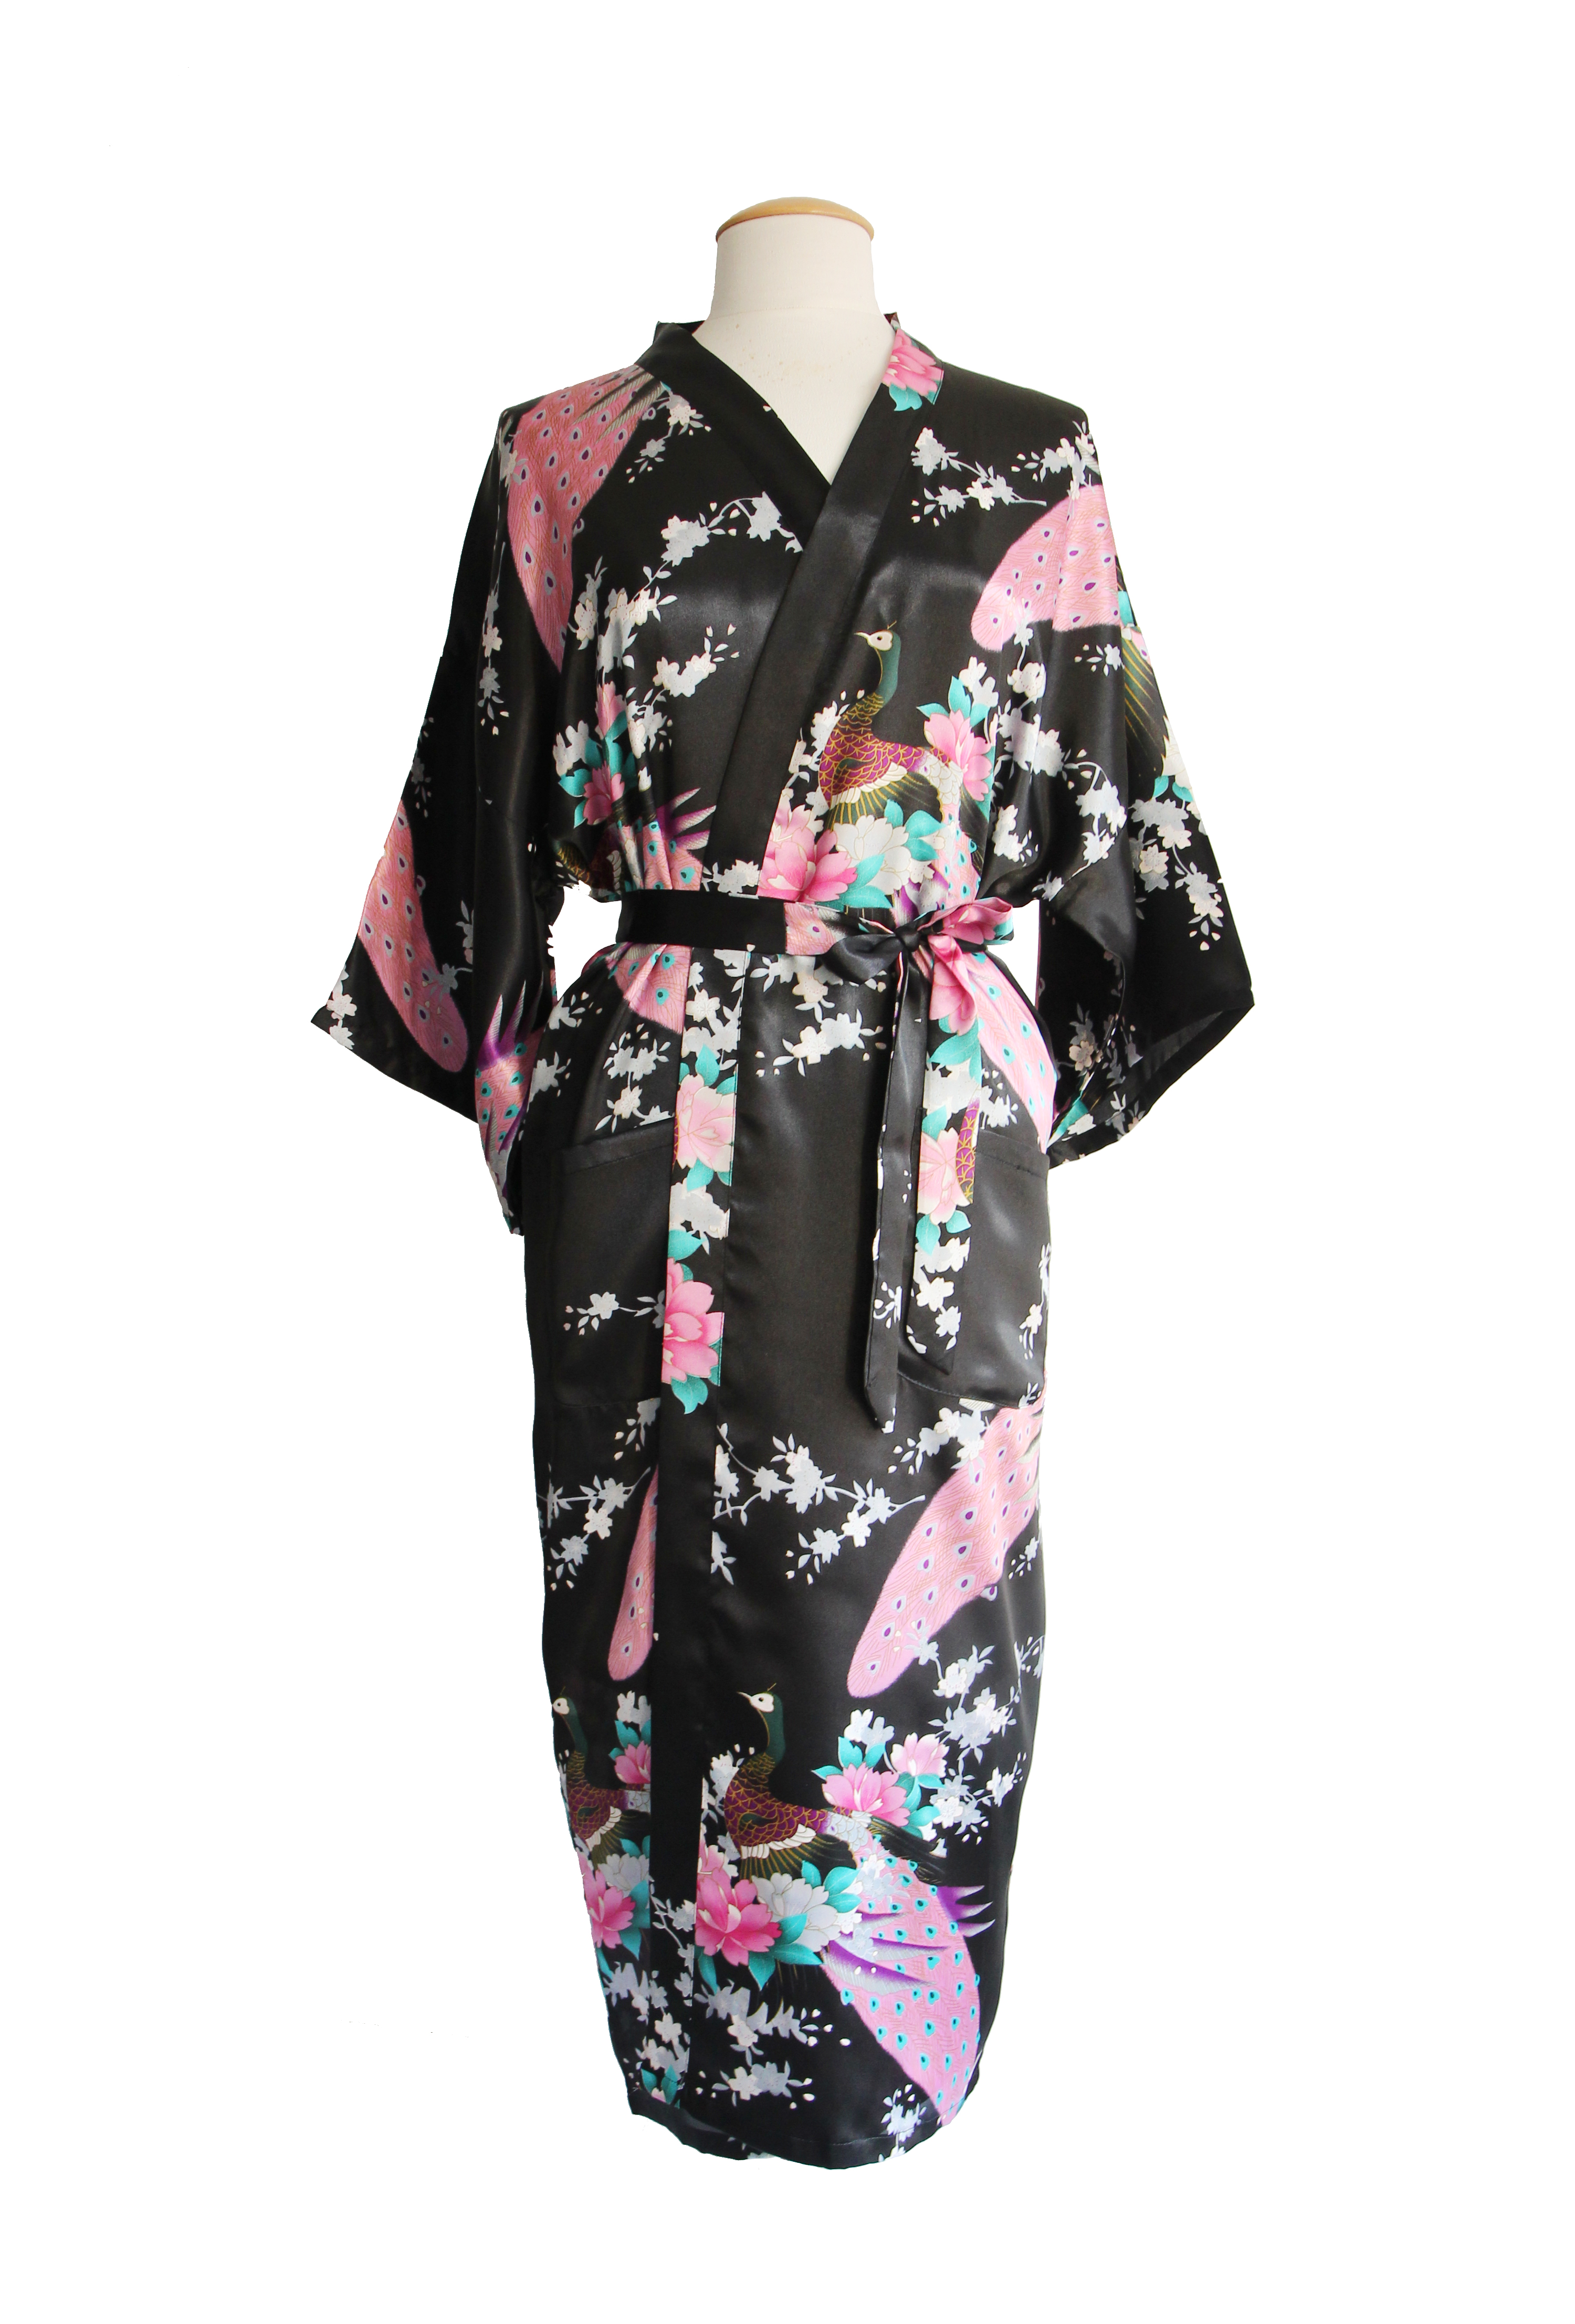 discretie kever Zware vrachtwagen Zwarte kimono satijn Japanse satijnen badjas kamerjas geisha ochtendjas  yukata kopen?